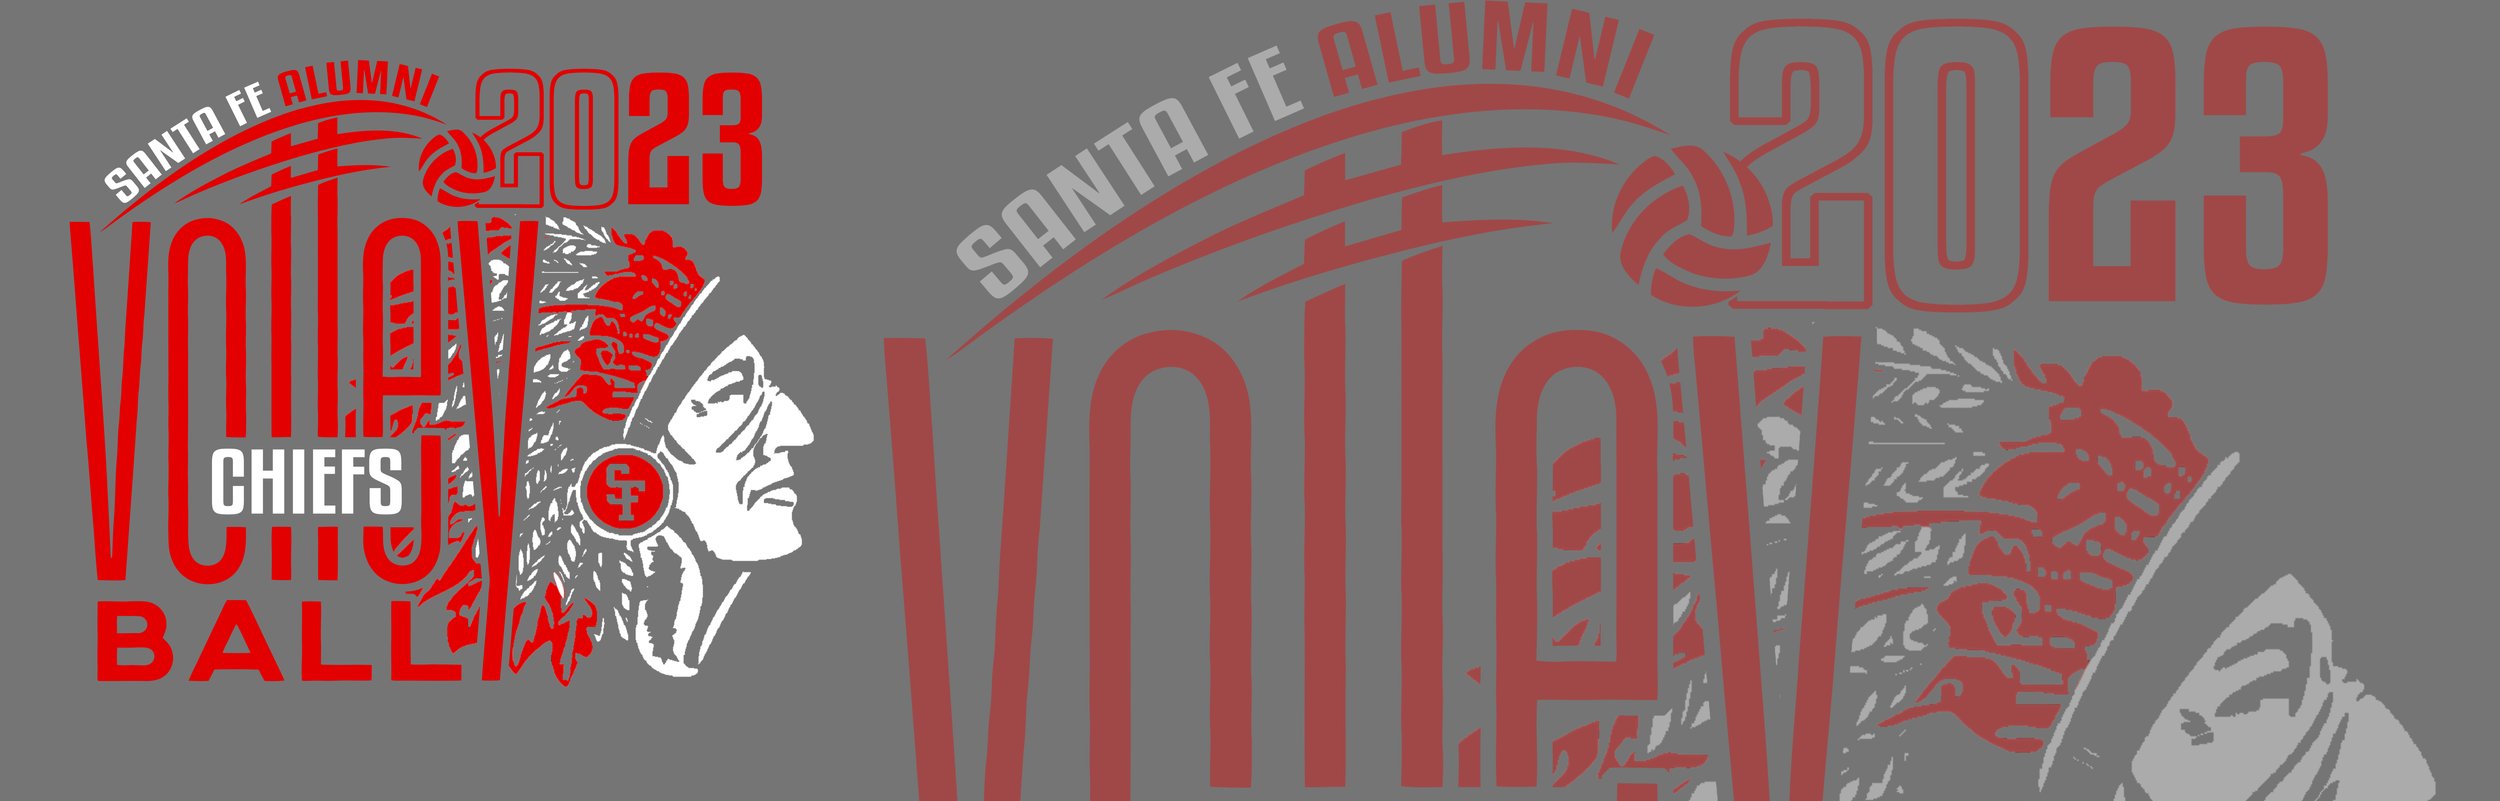 volleyball sf alumni banner.jpg